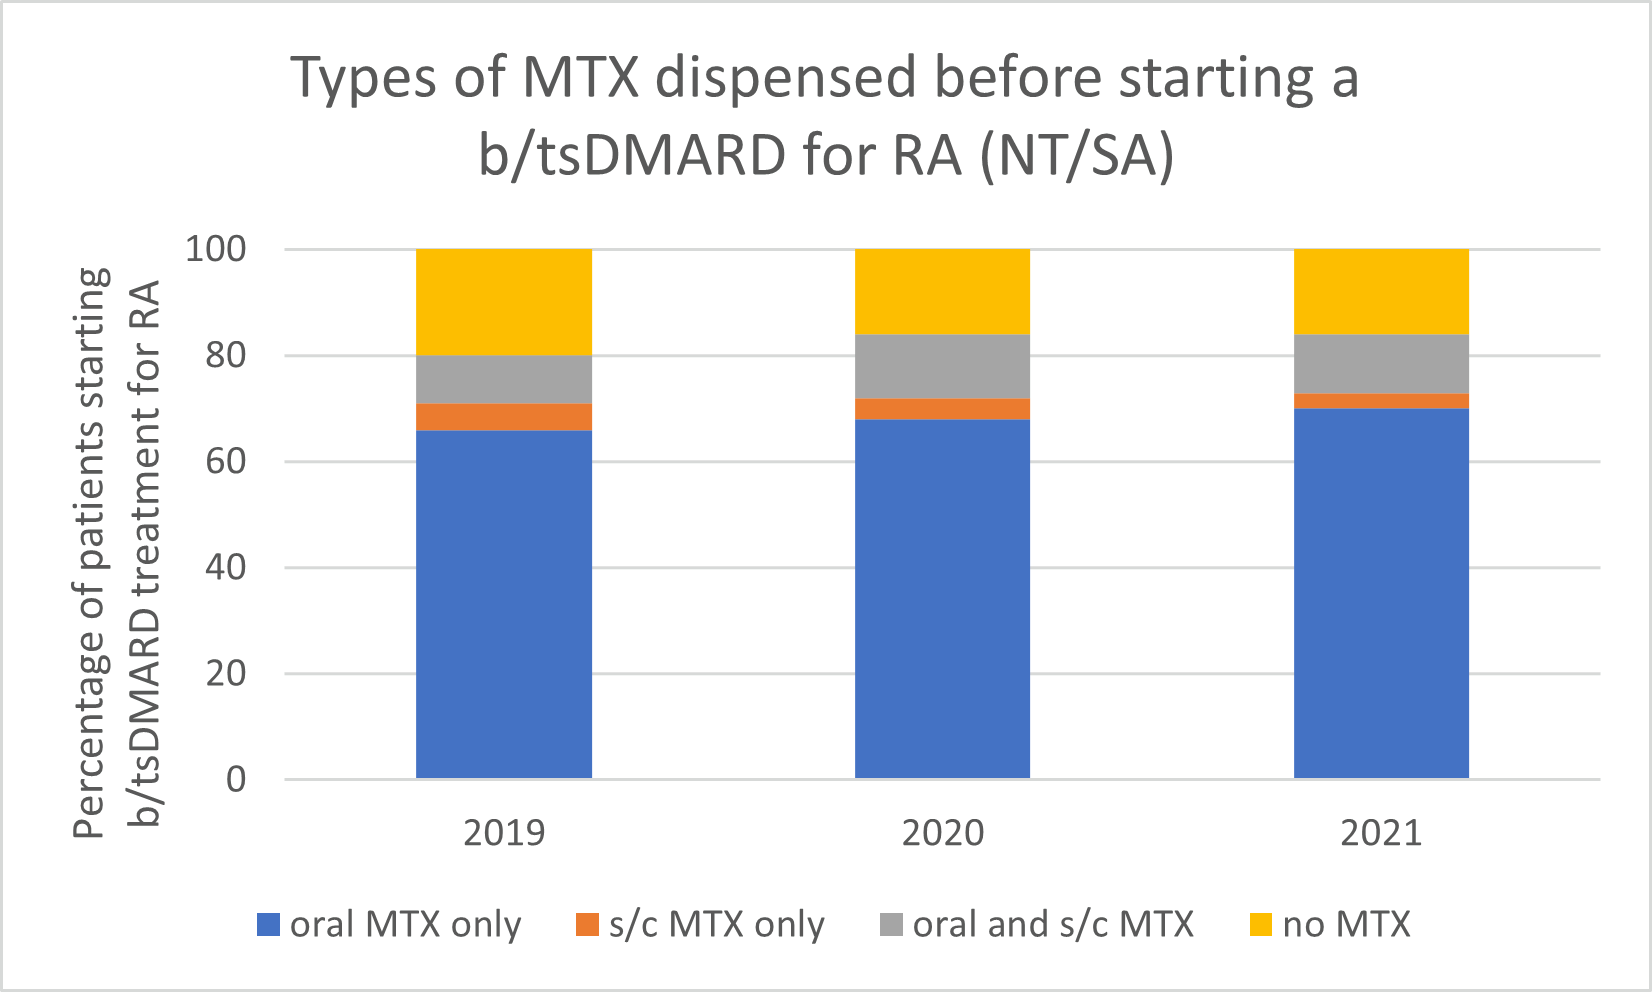 Types of methotrexate used before starting a b/tsDMARD for RA, 2019–2021 (NT/SA)